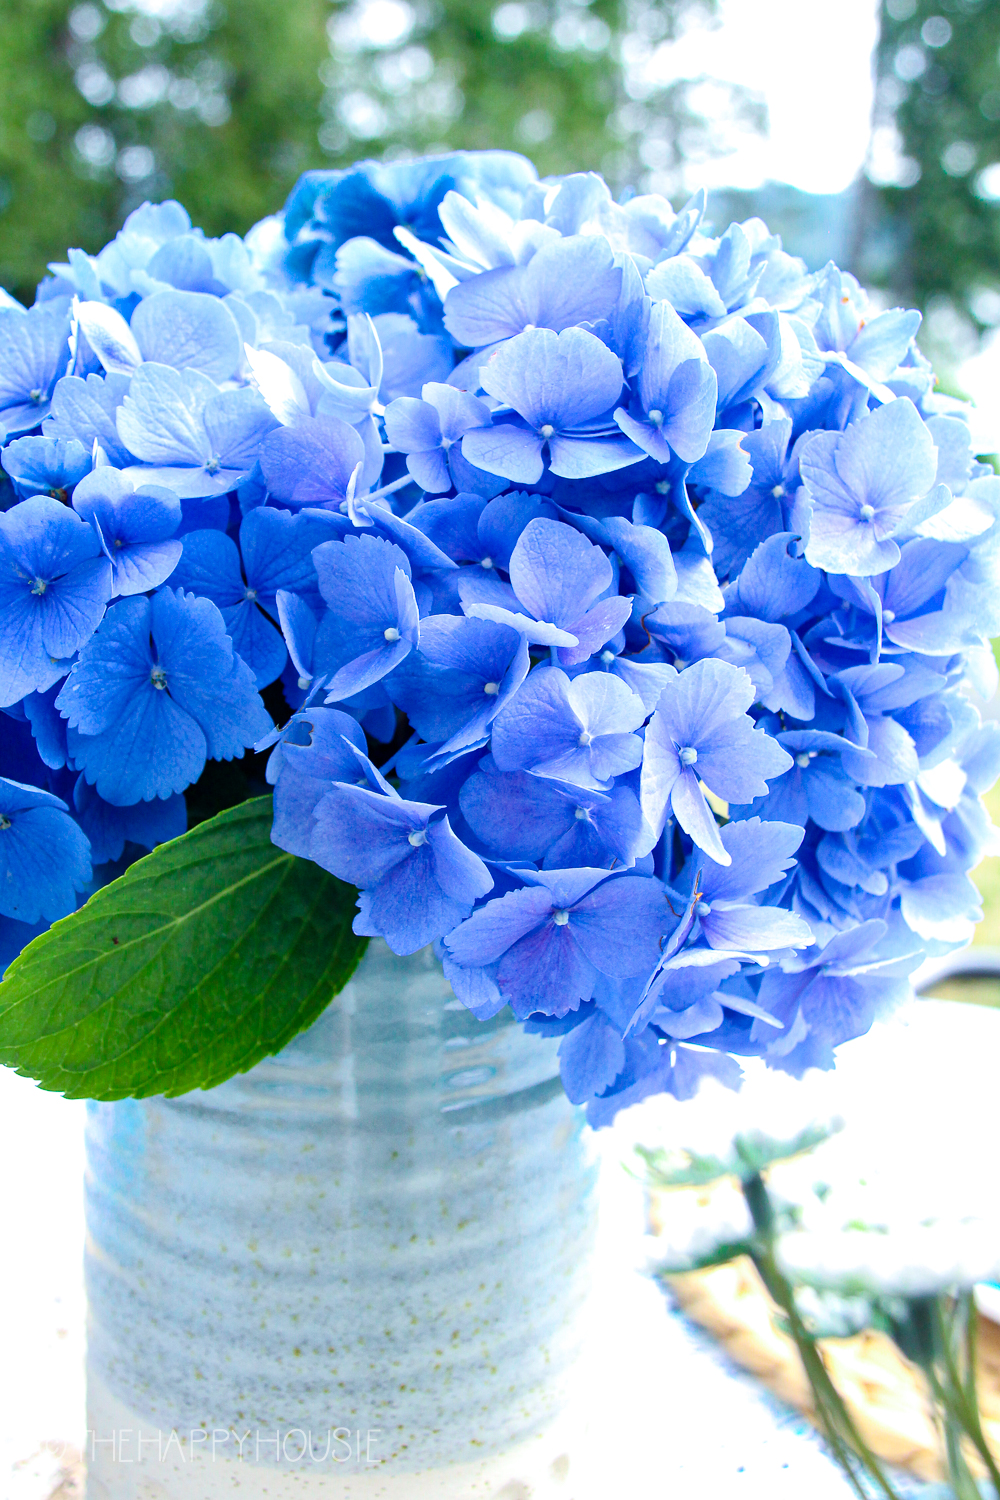 Bright blue hydrangeas are on the table in a ceramic vase.